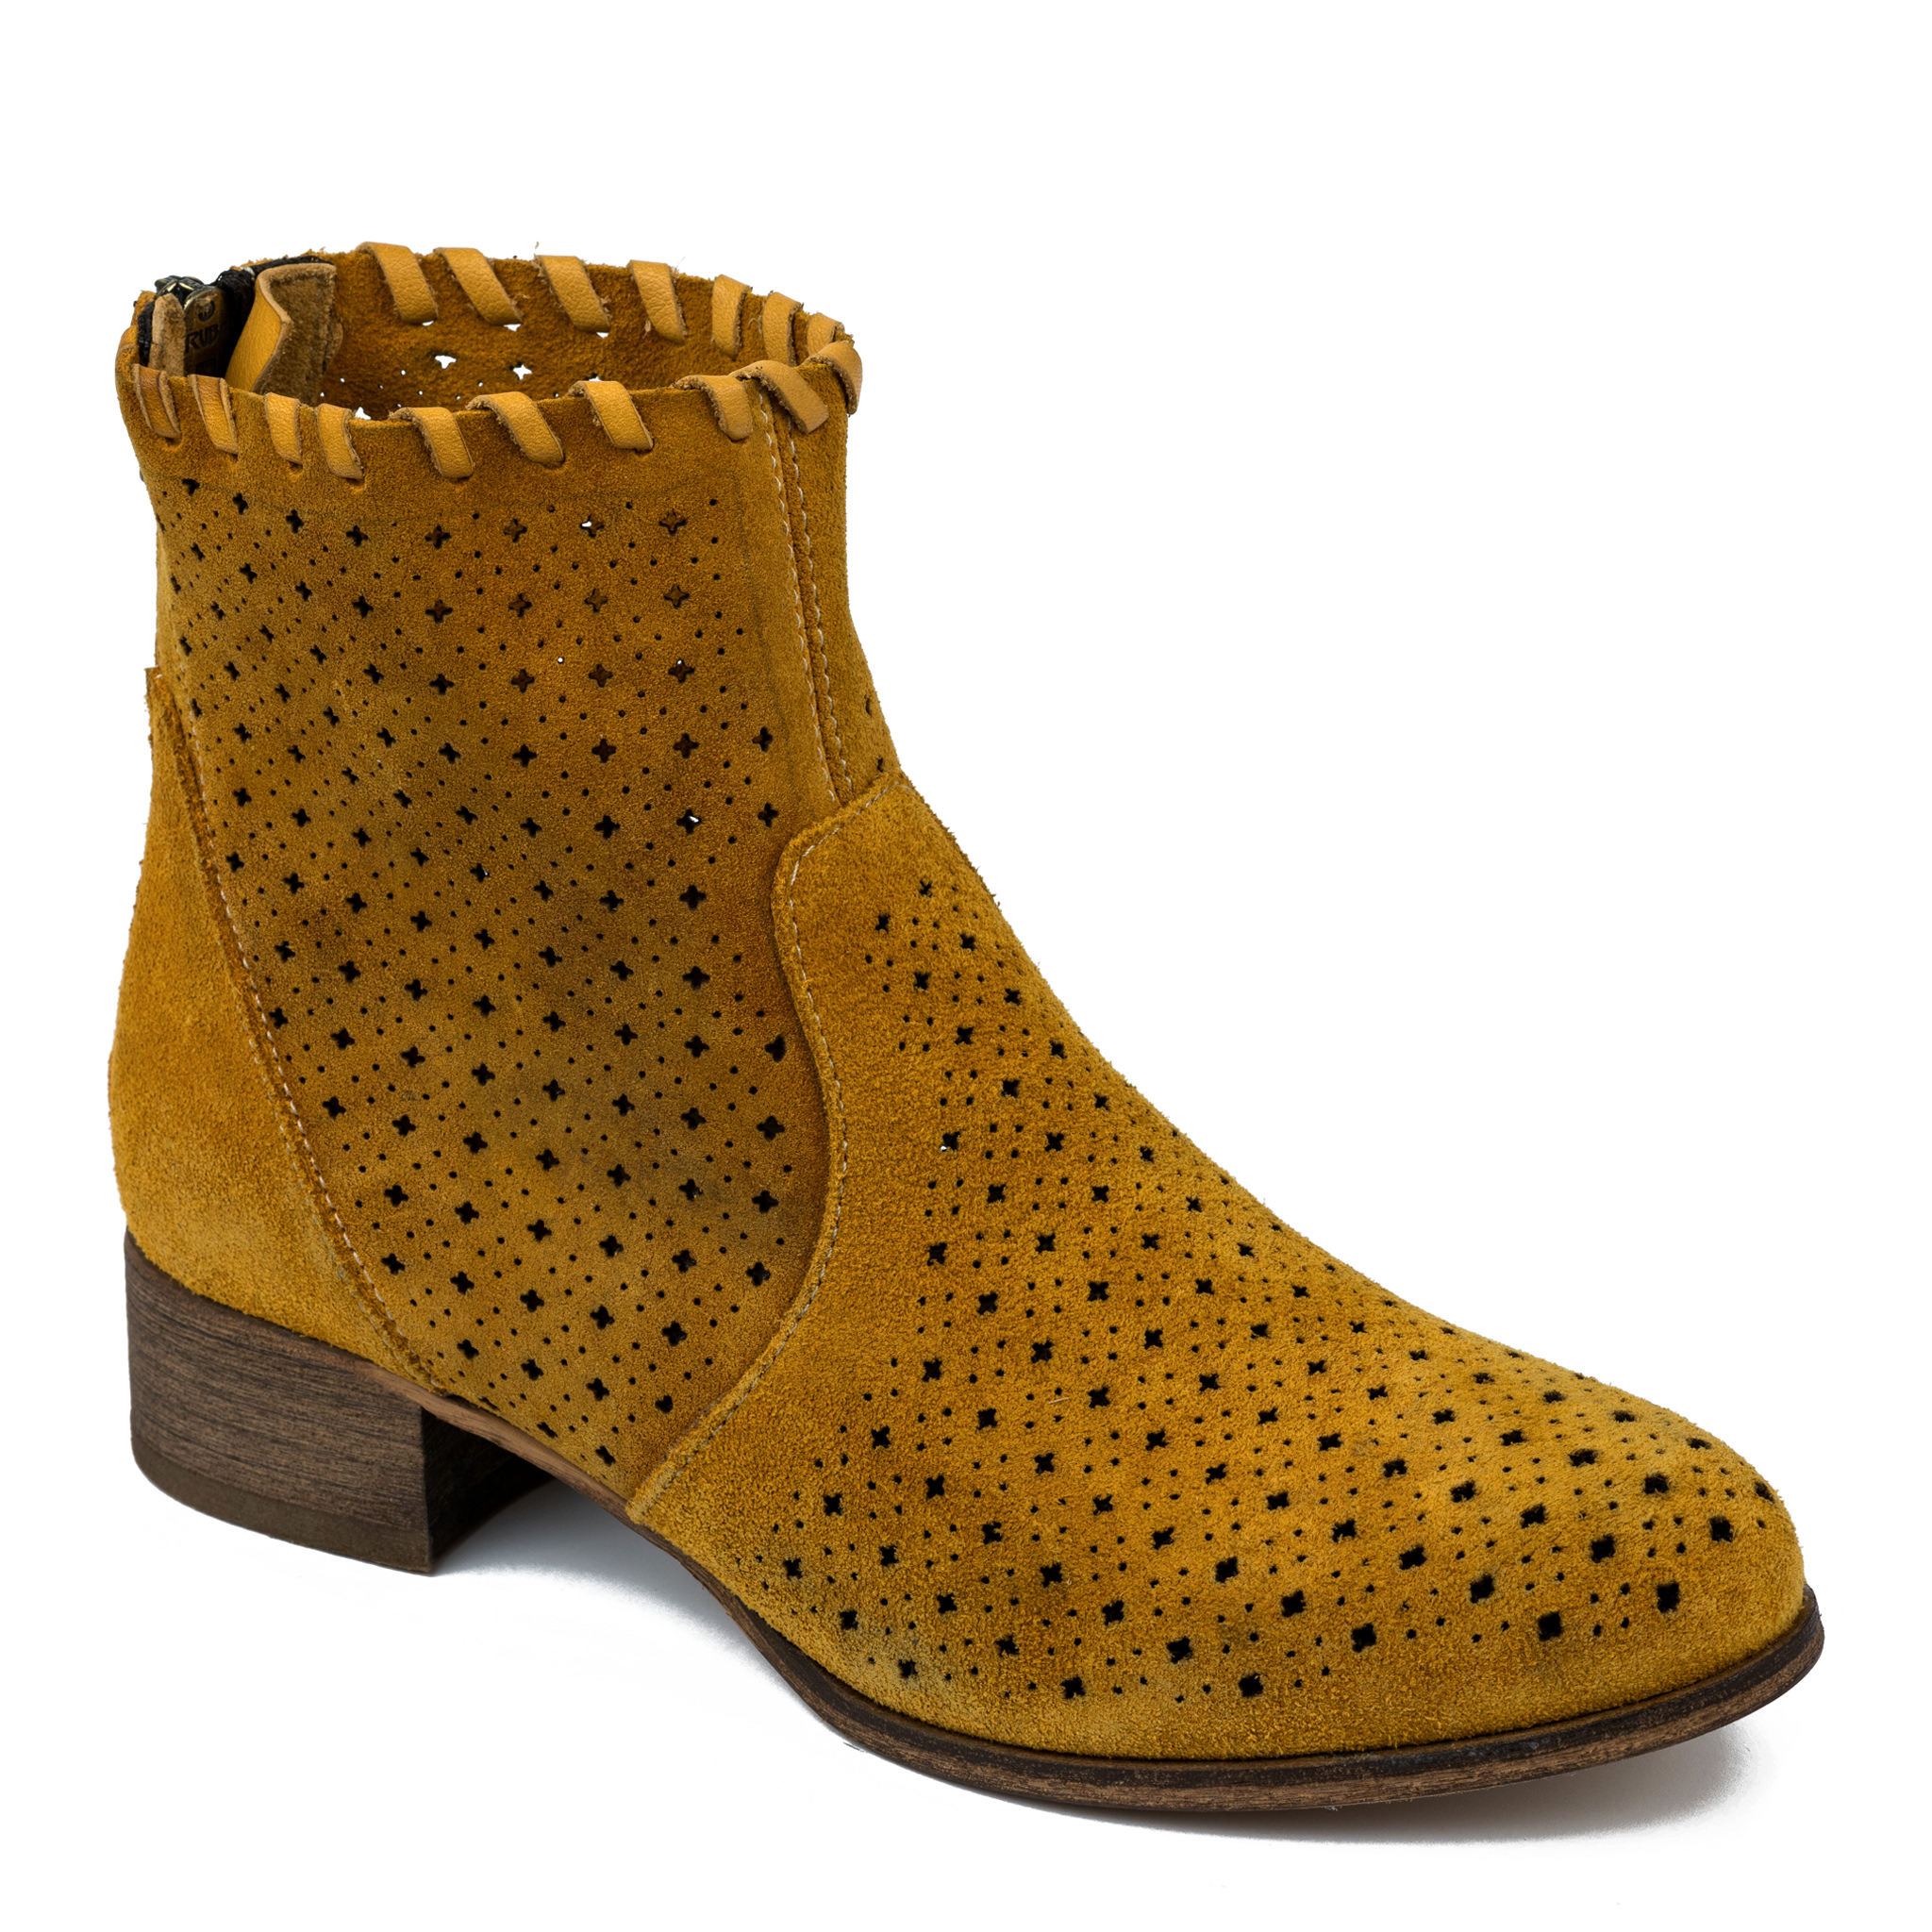 Leather summer boots A184 - OCHRE